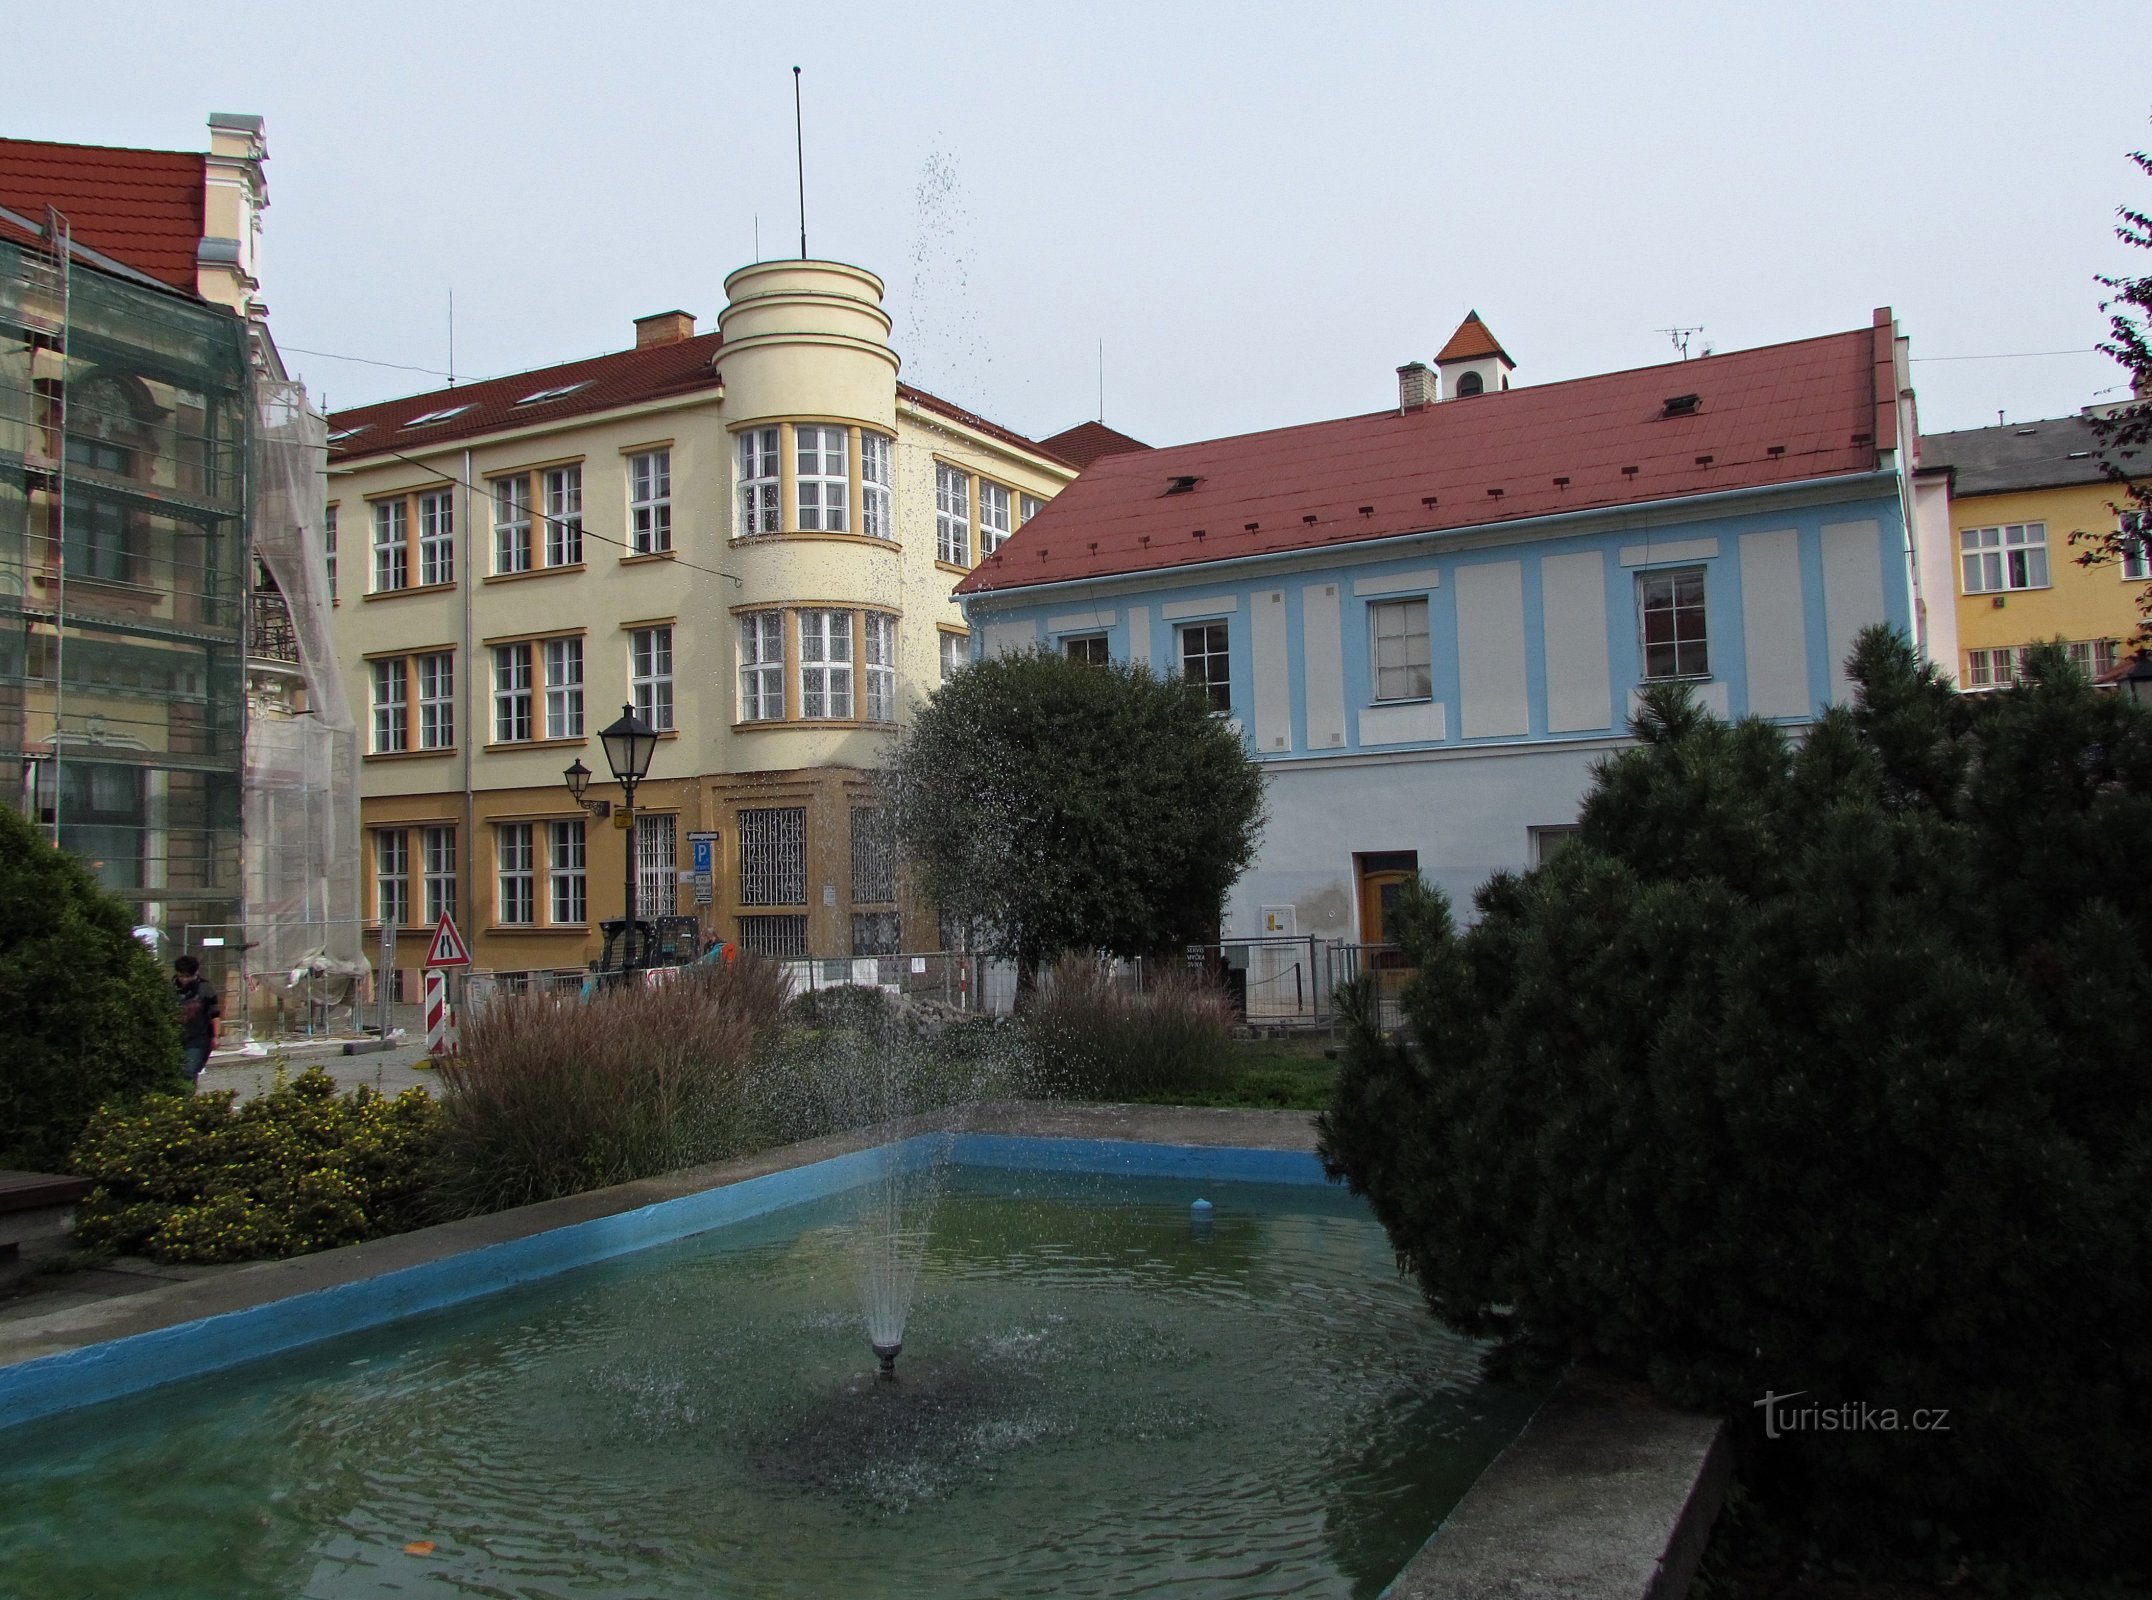 A visit to the castle in Nové Jičín and a trip to Skalky